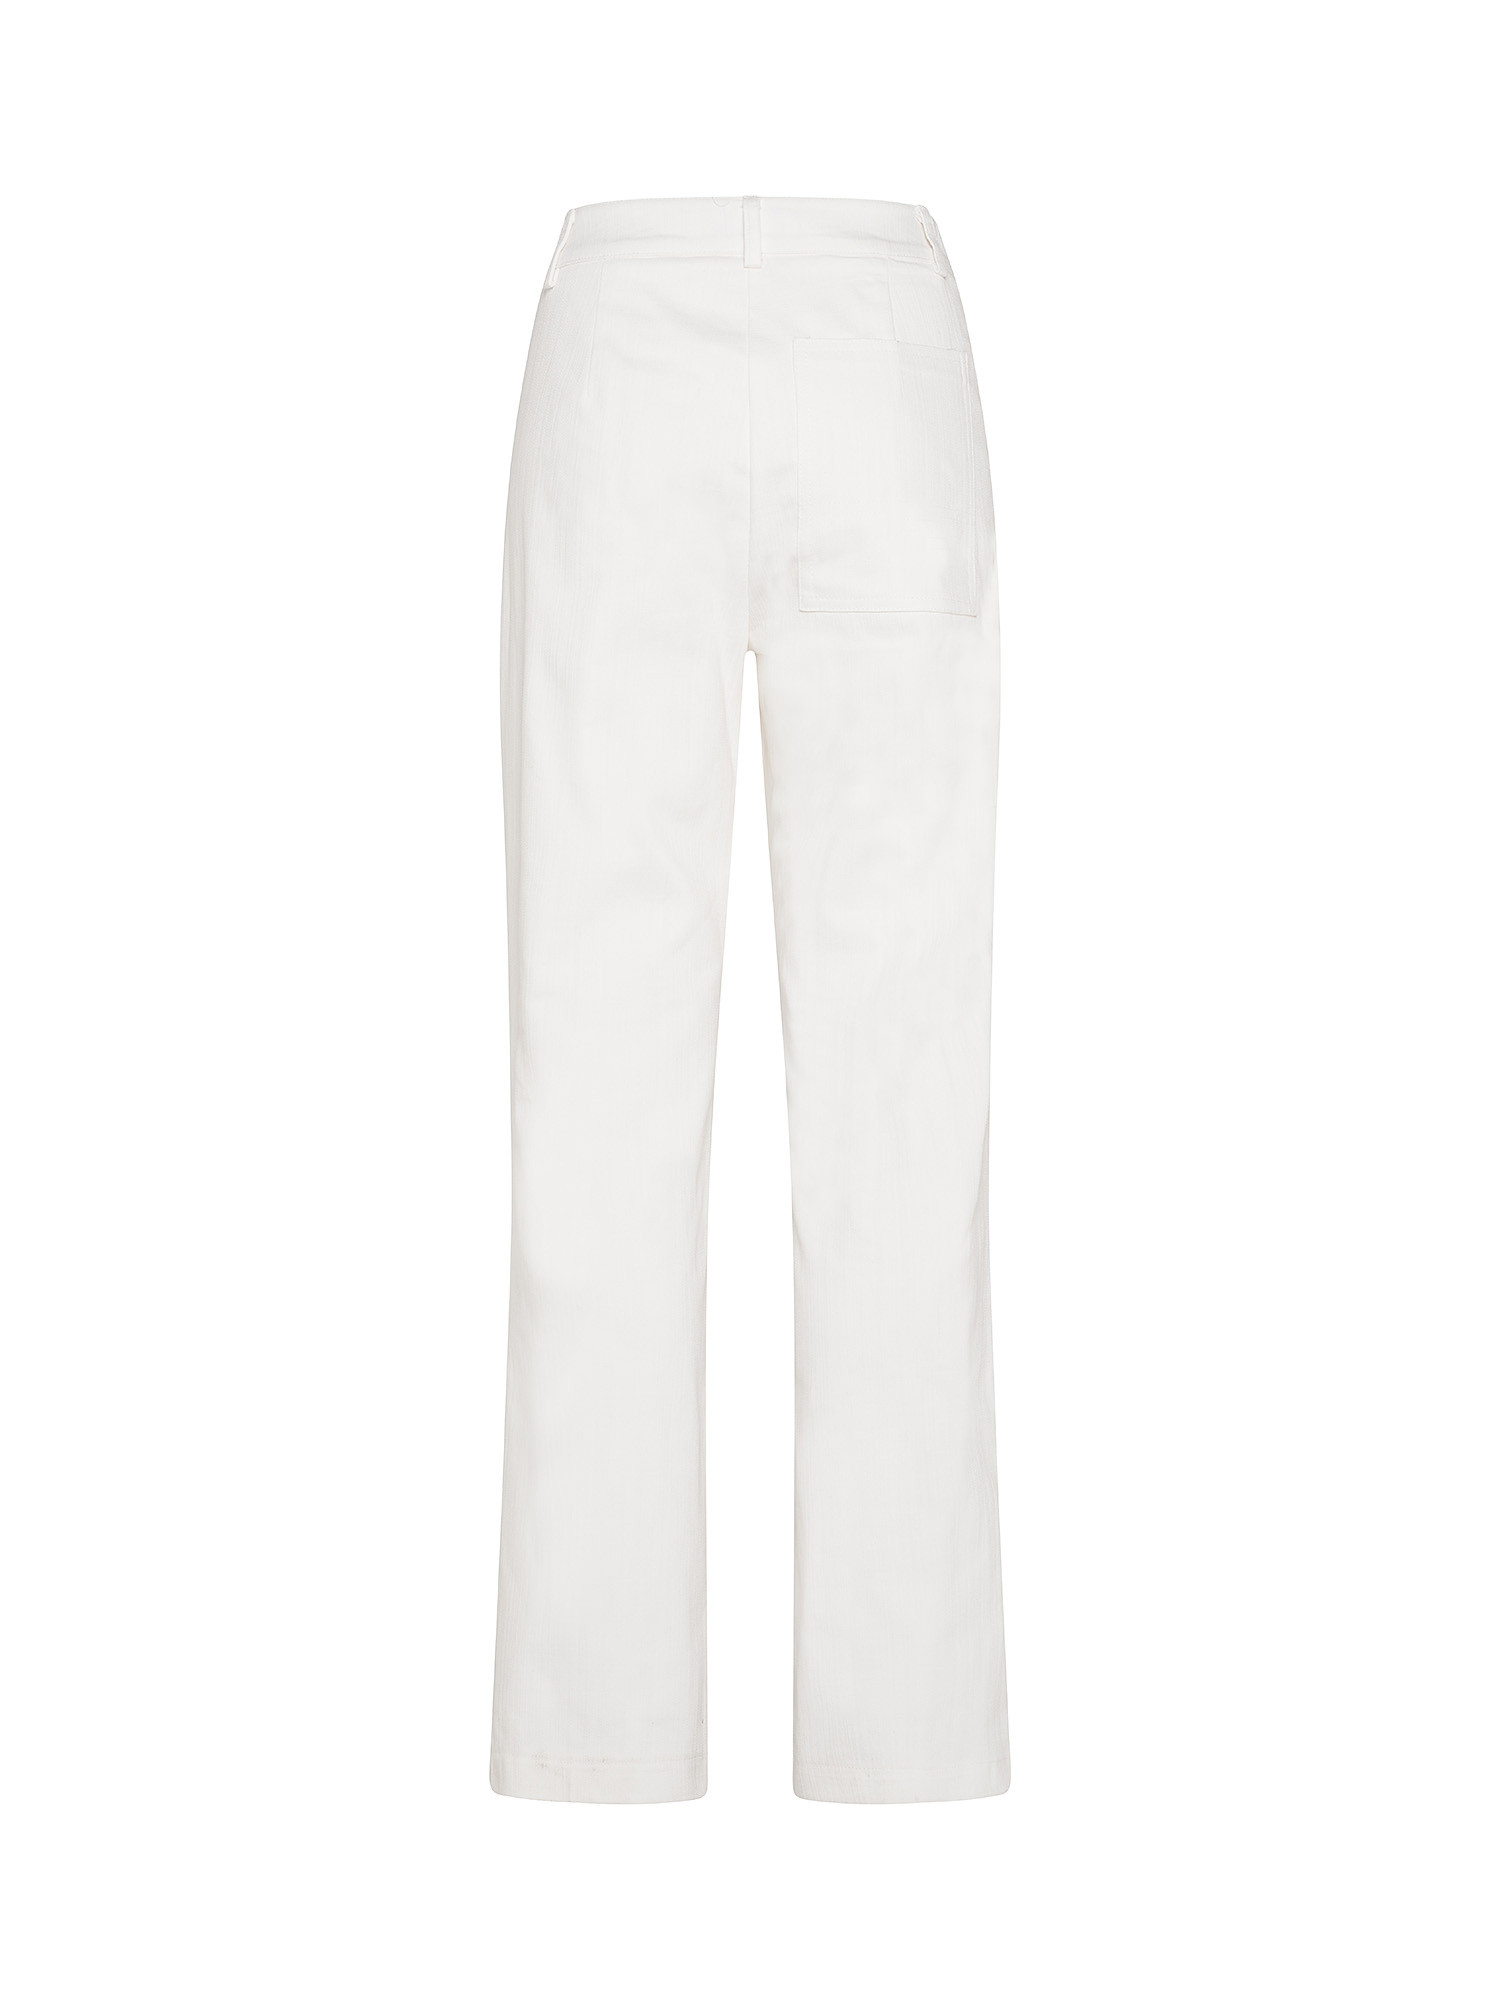 Pantalone jeans, Bianco, large image number 1